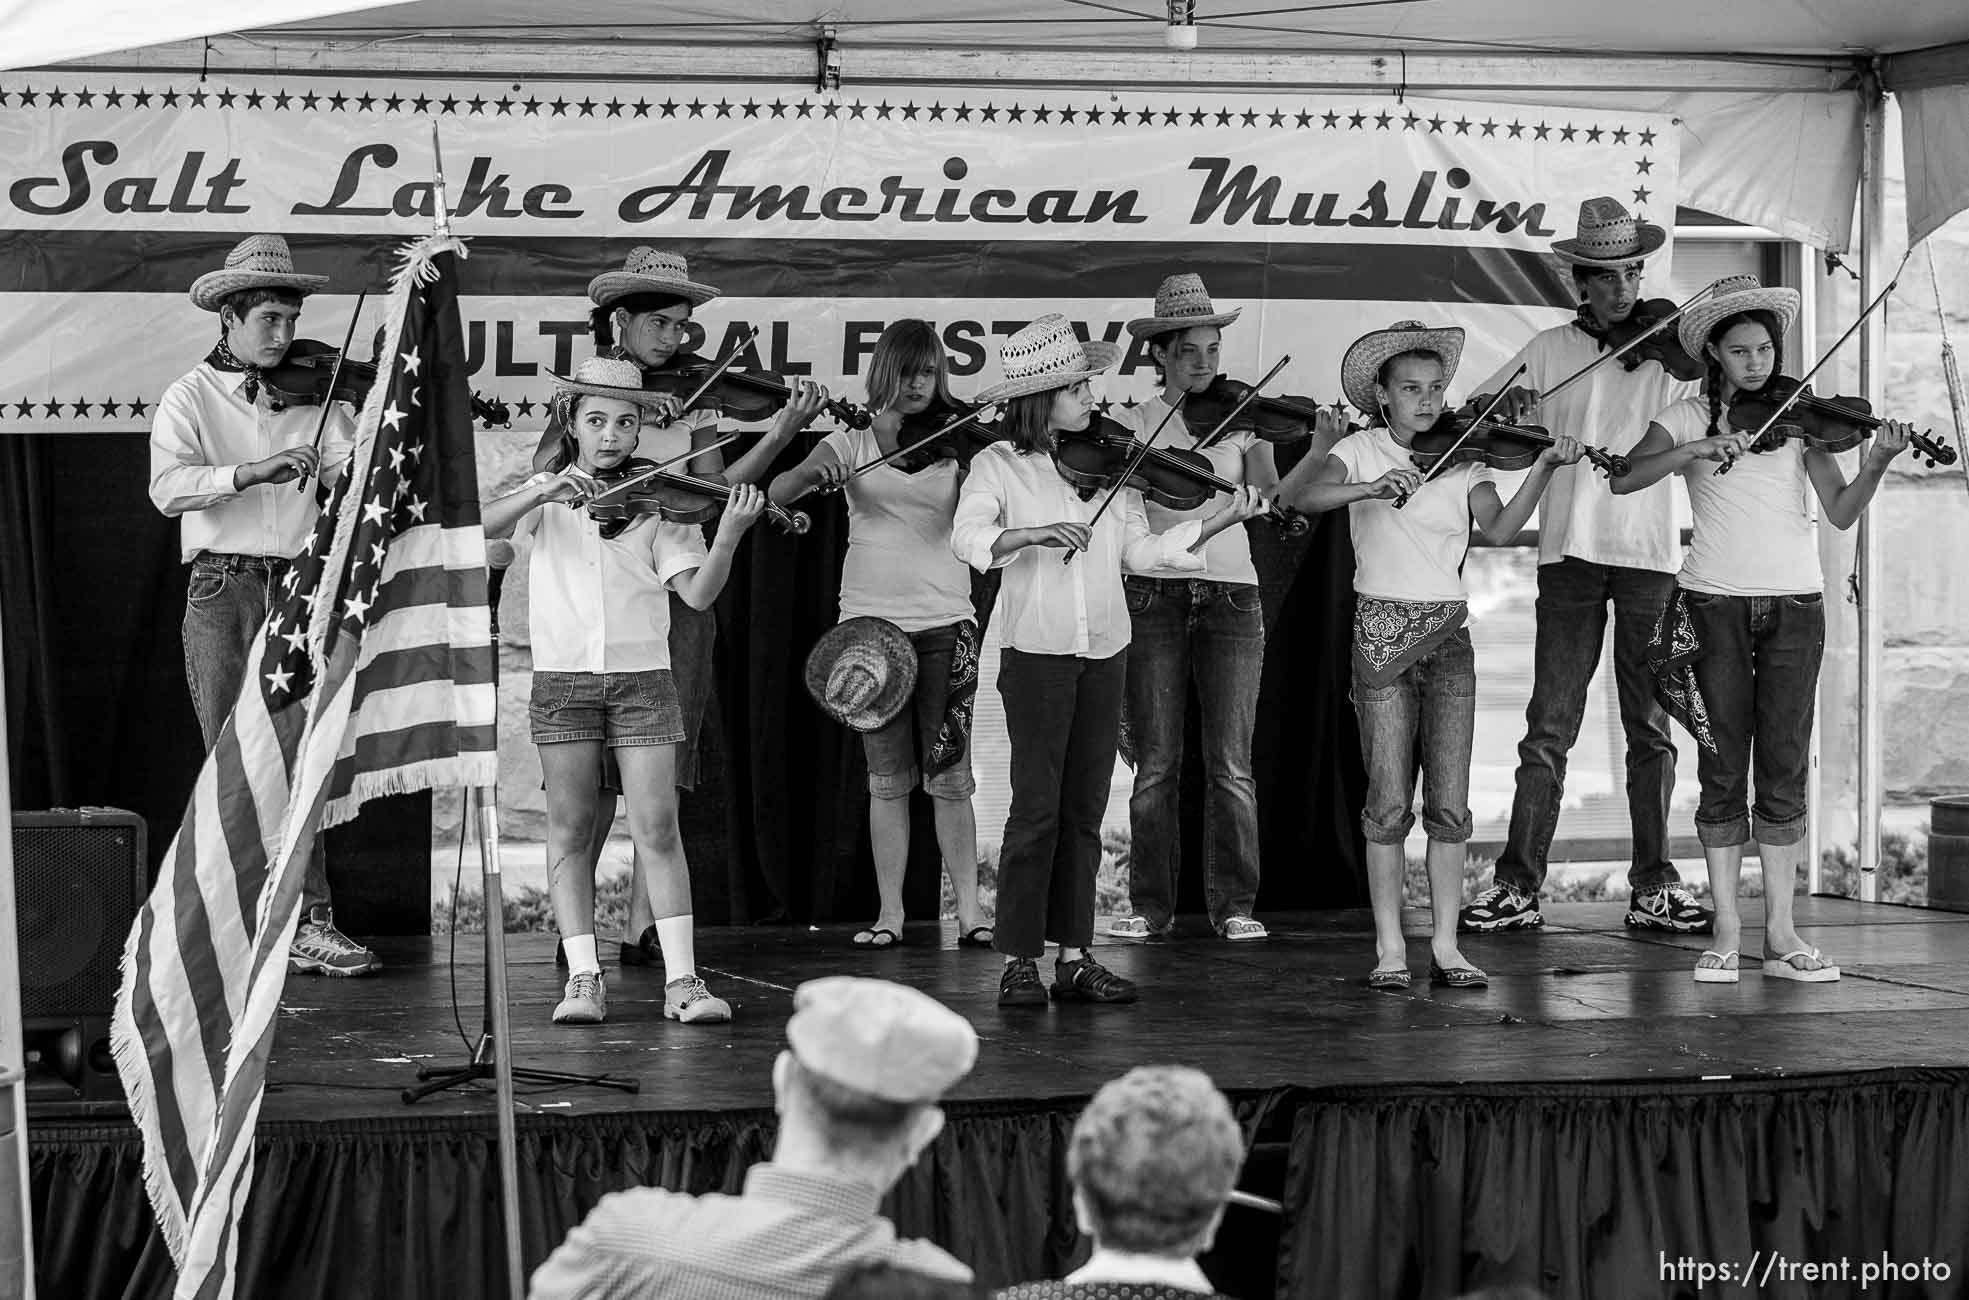 Fiddlers at Salt Lake American Muslim Cultural Festival